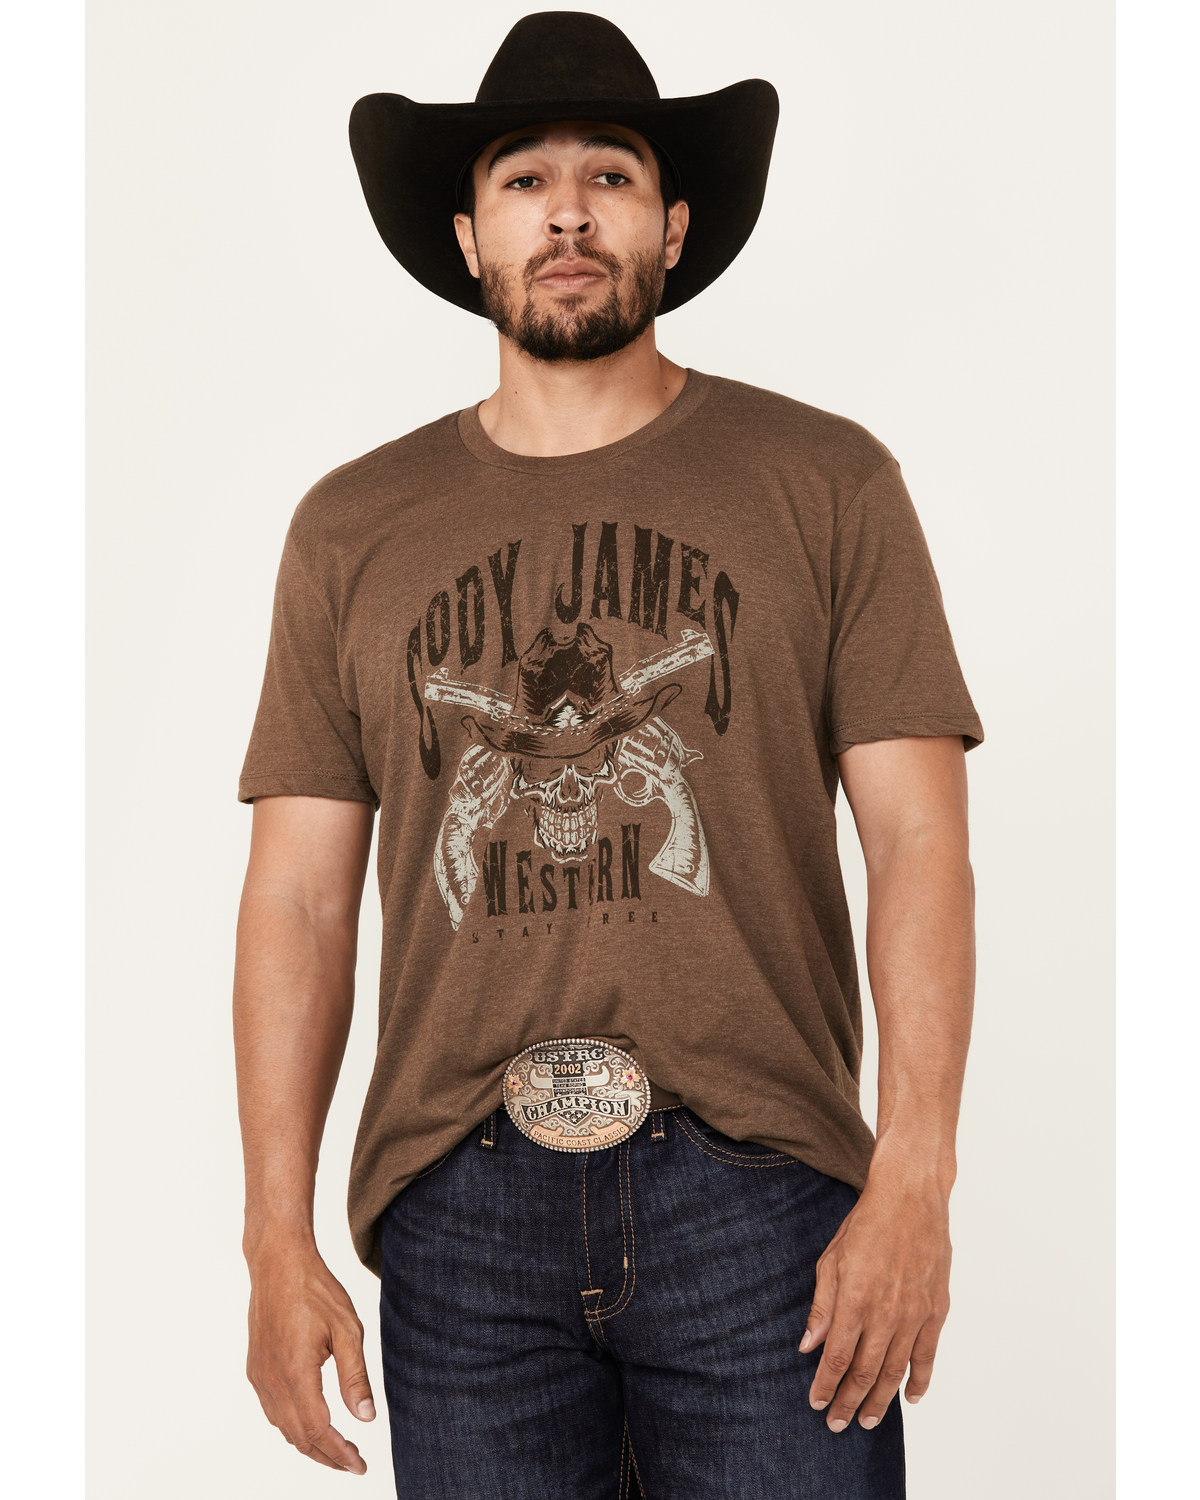 Cody James Men's Stay Free Short Sleeve Graphic T-Shirt